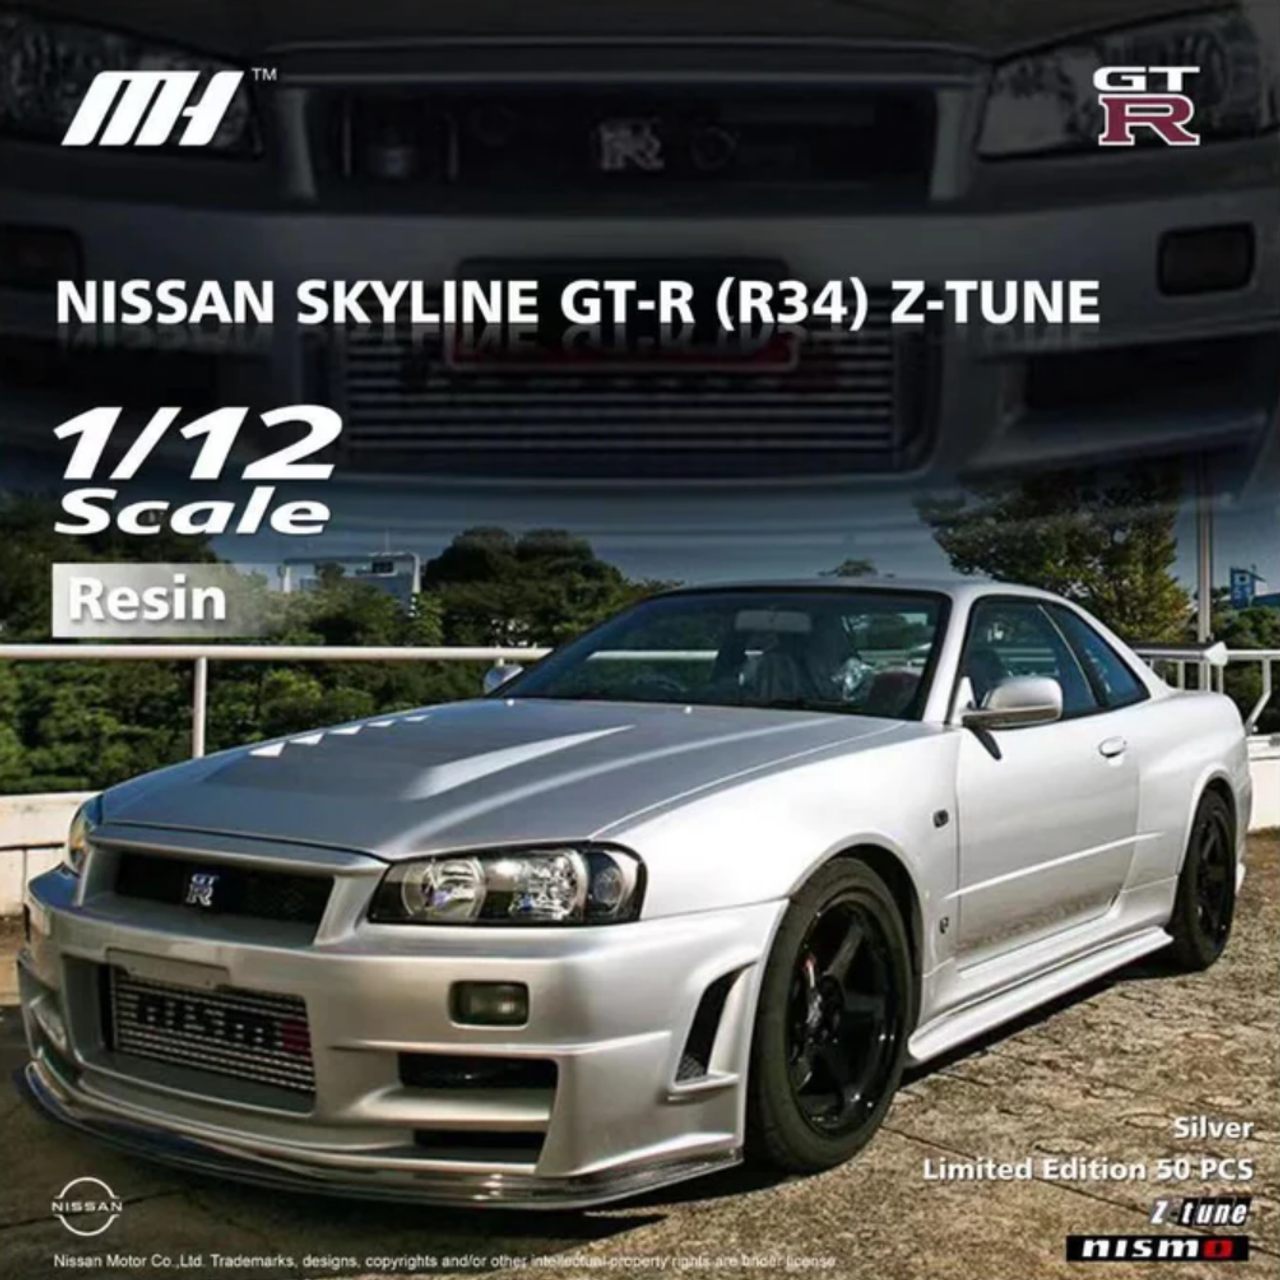 1/12 Motorhelix Nissan Skyline GT-R (R34) Z-Tune (Silver) Fully Open Diecast Car Model with Extra Engine